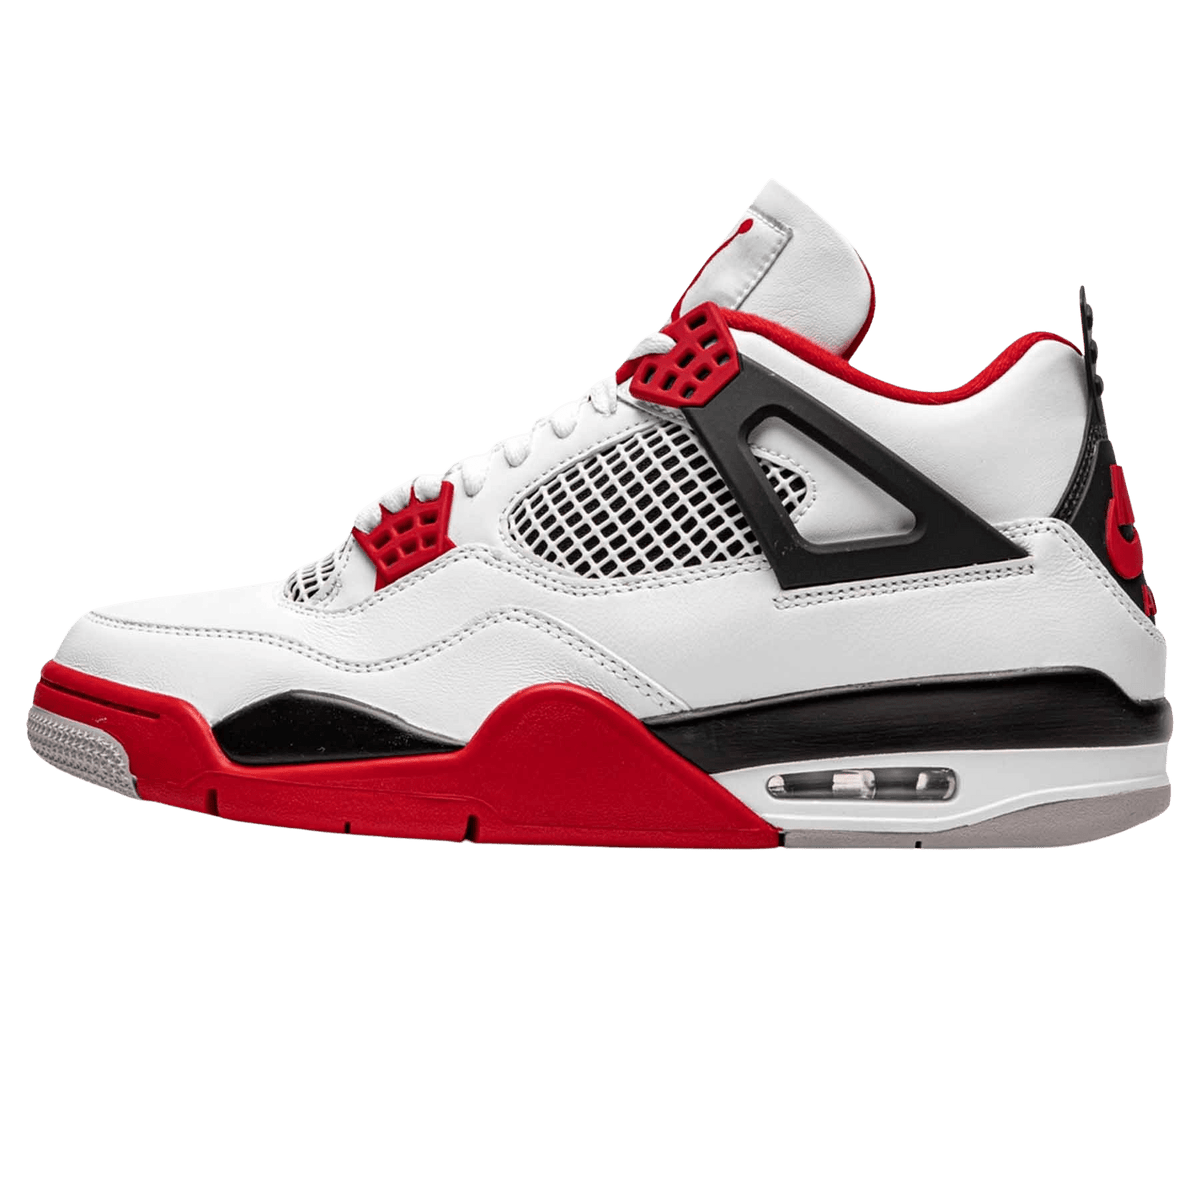 Air Jordan colors 4 Retro OG 'Fire Red' 2020 - UrlfreezeShops